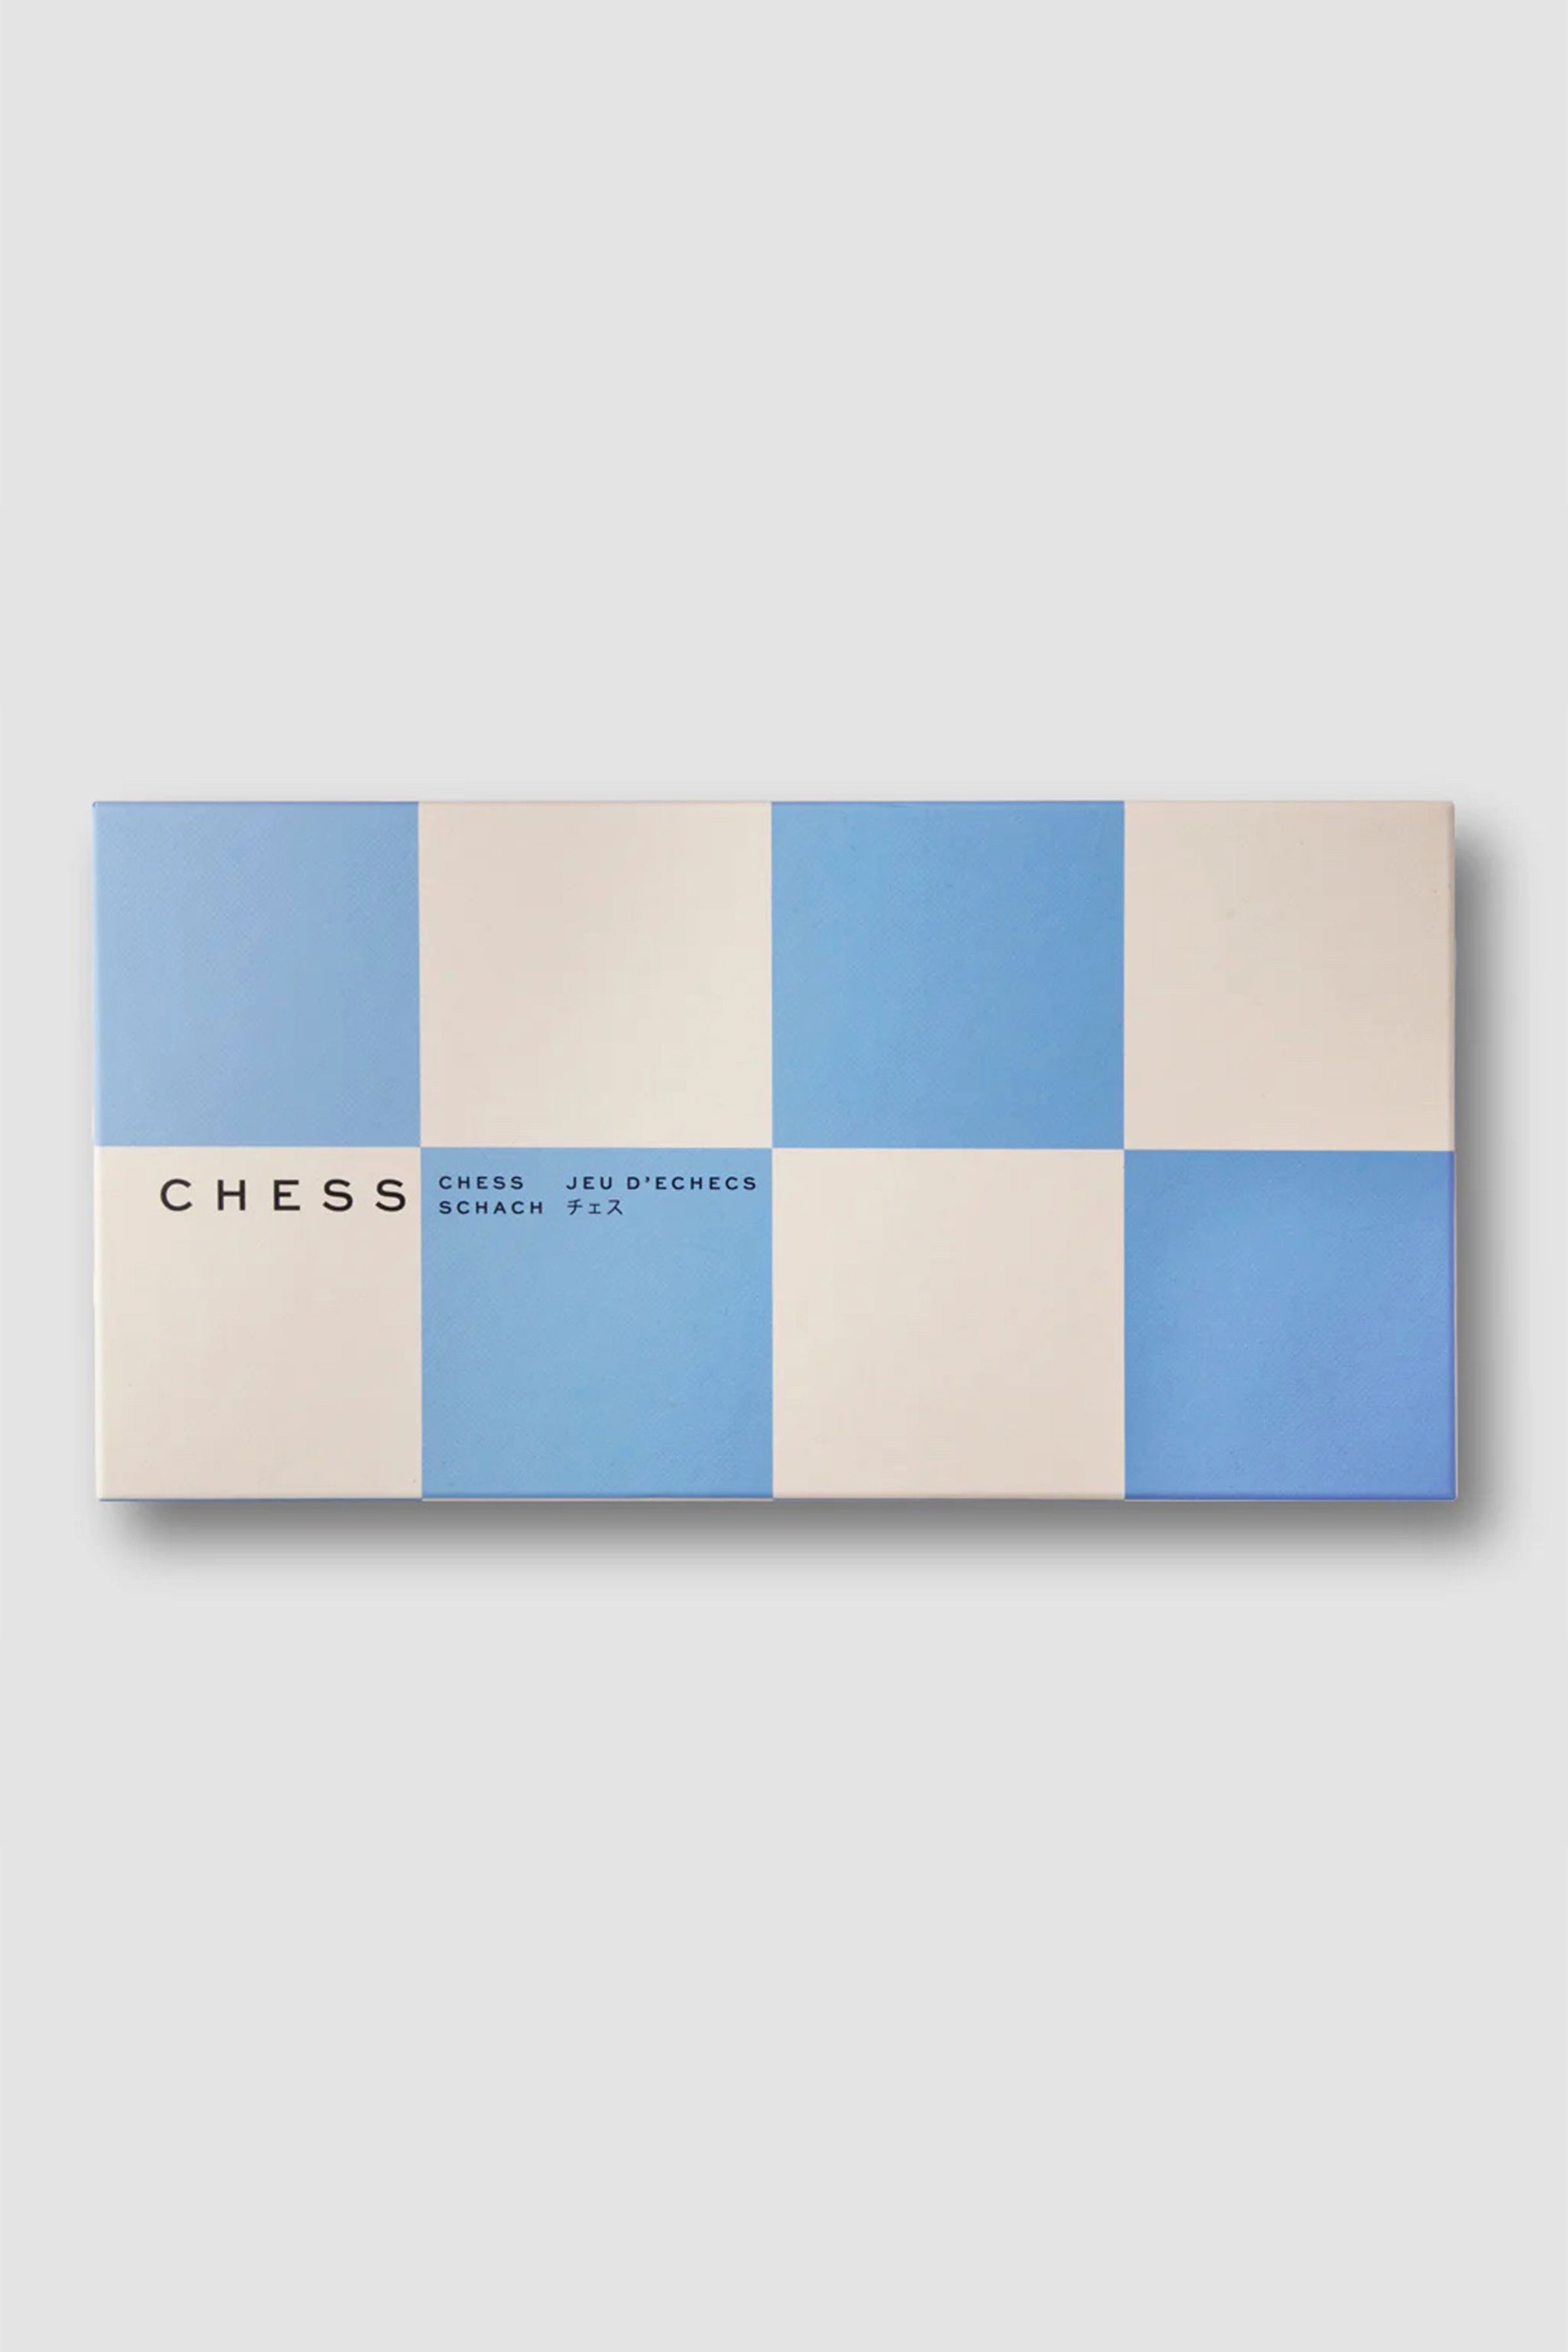 Chess (Play), The Yo Store